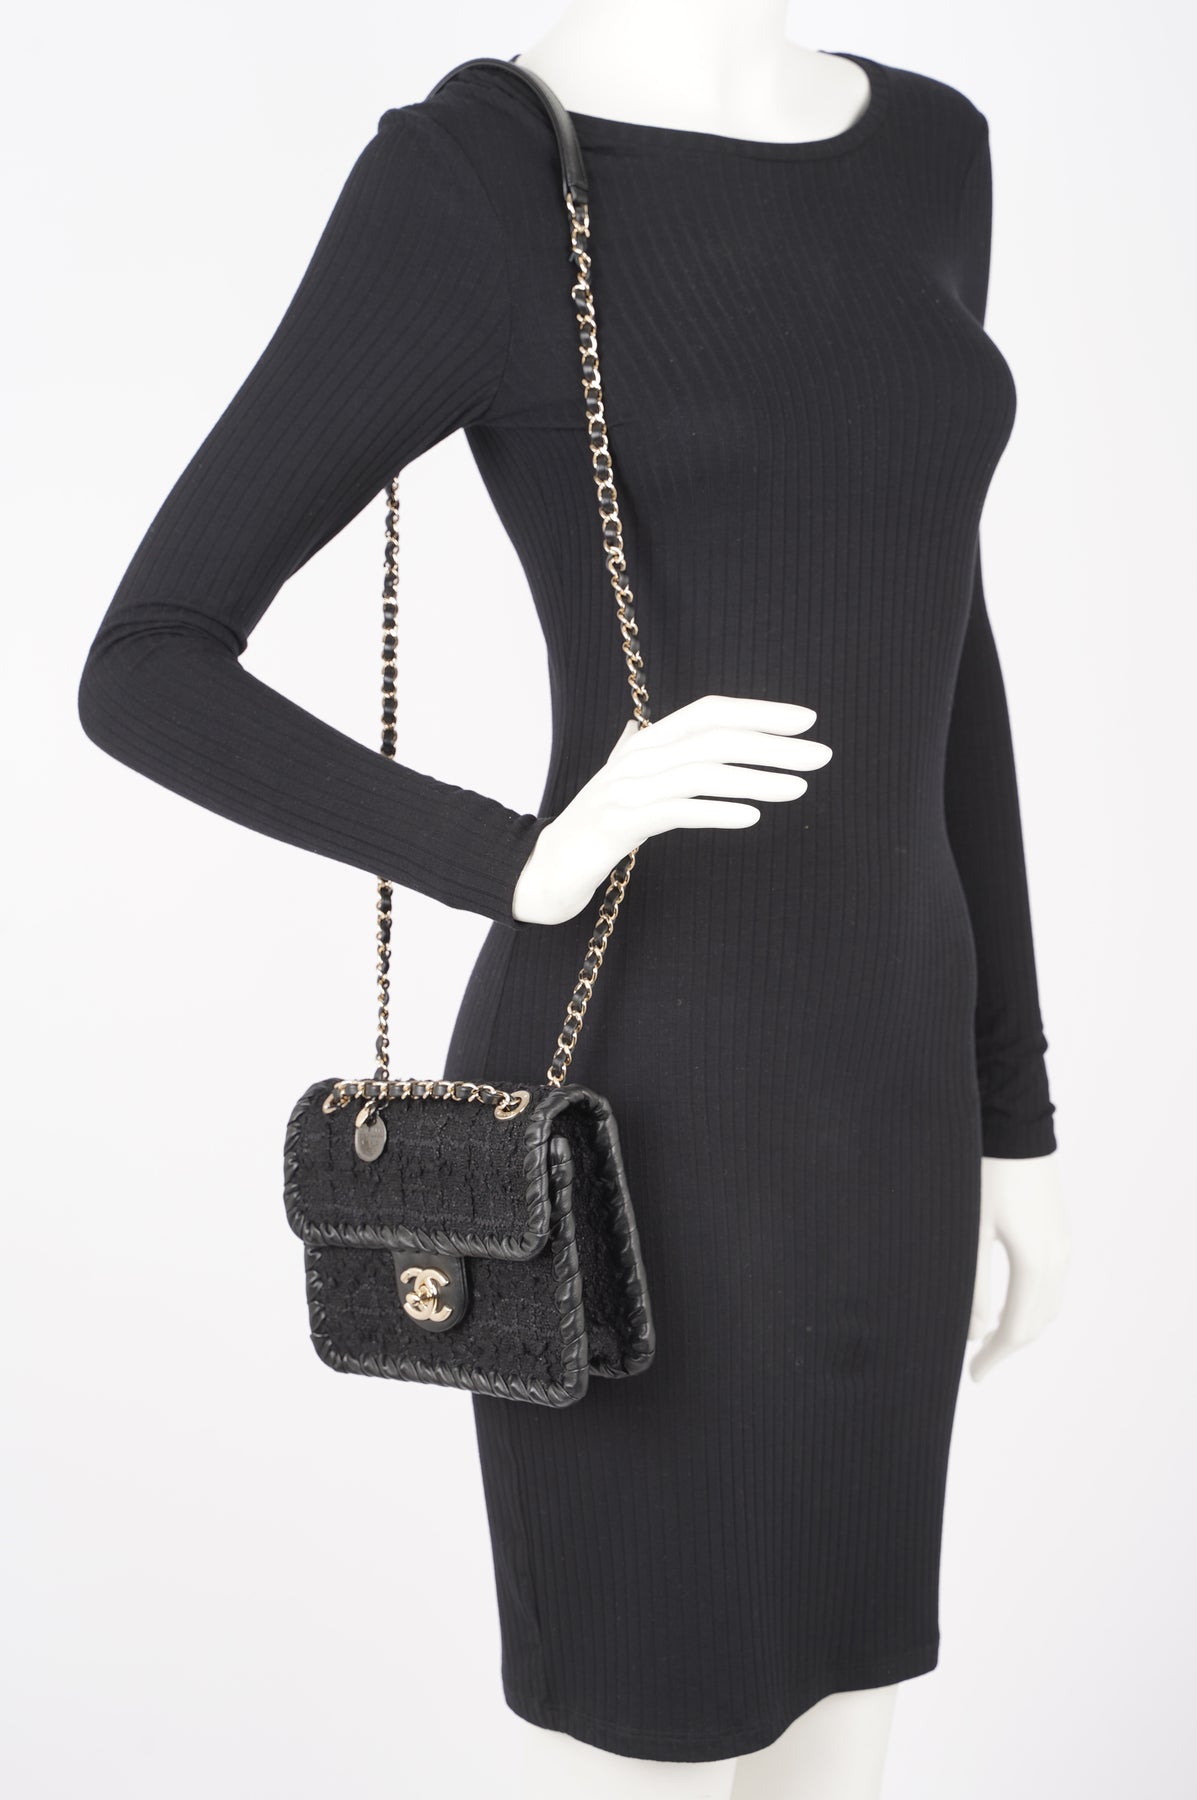 Chanel Quilted Black Silk Mini Camellia Classic Flap Shoulder Bag